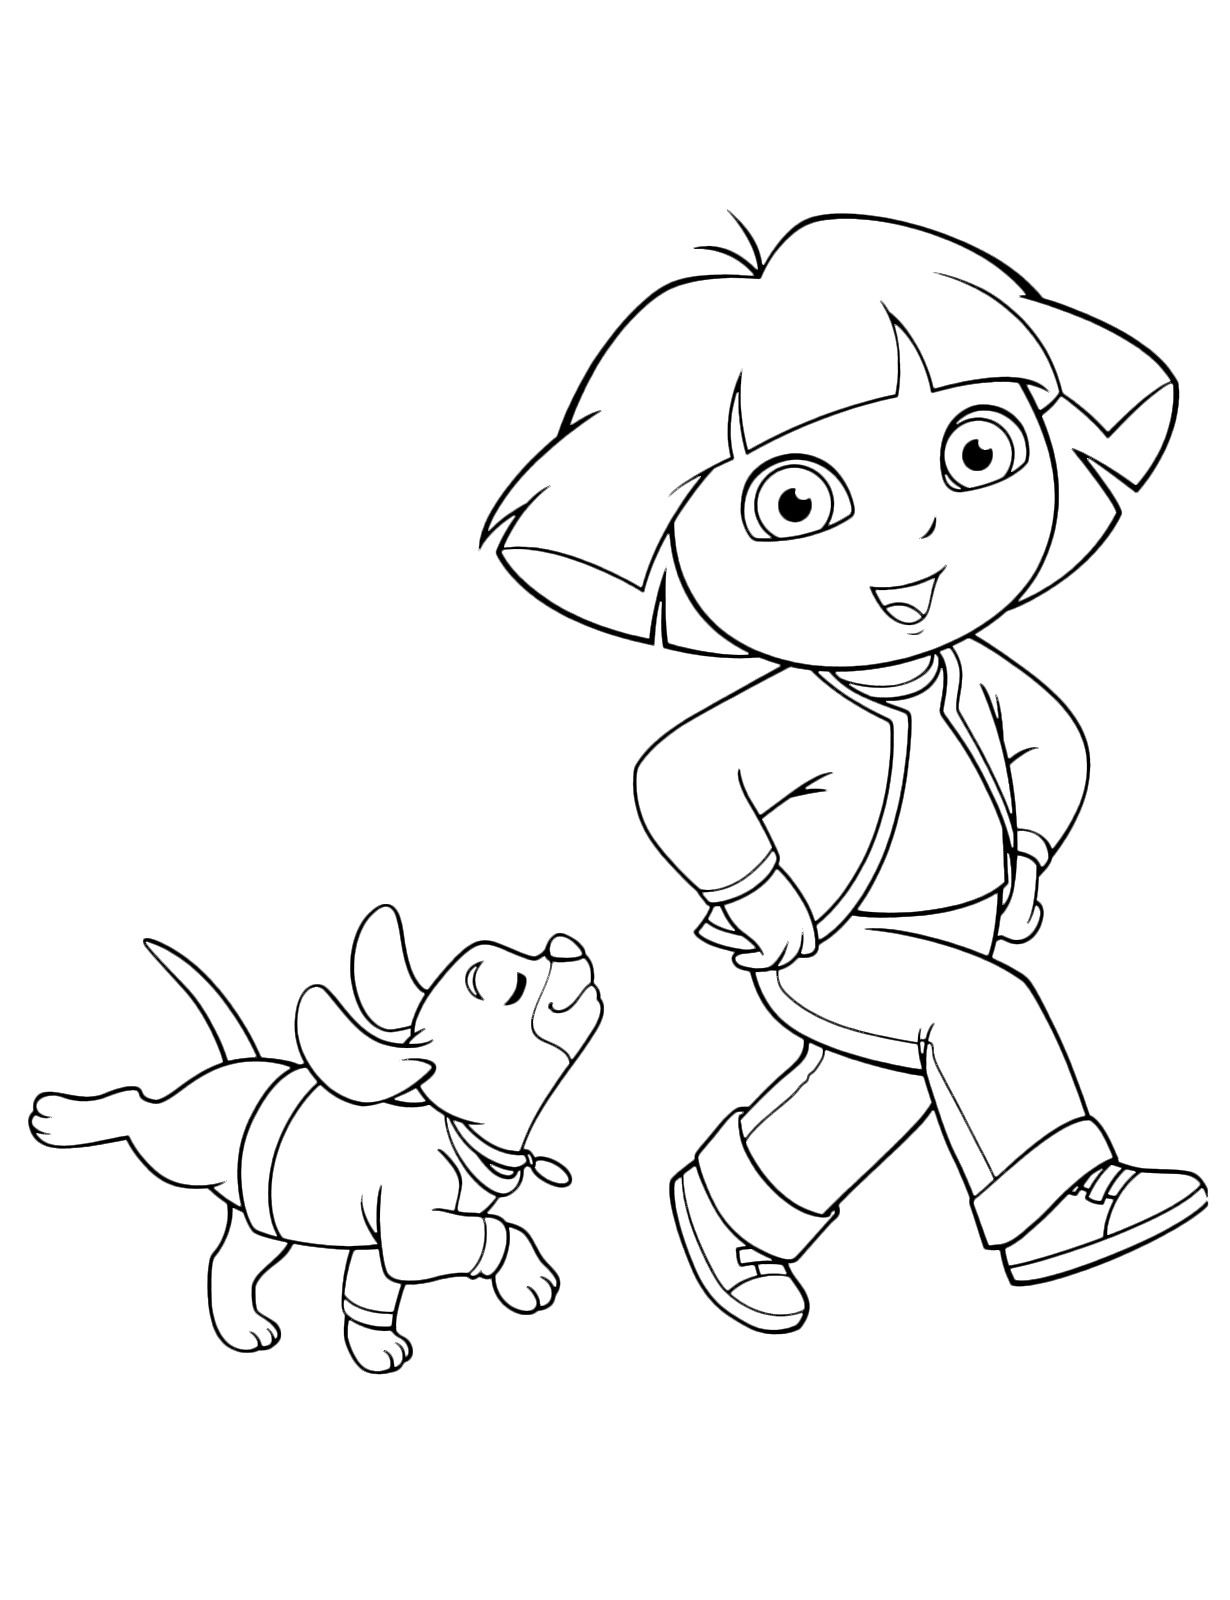 Dora l'esploratrice - Un canino segue felice Dora